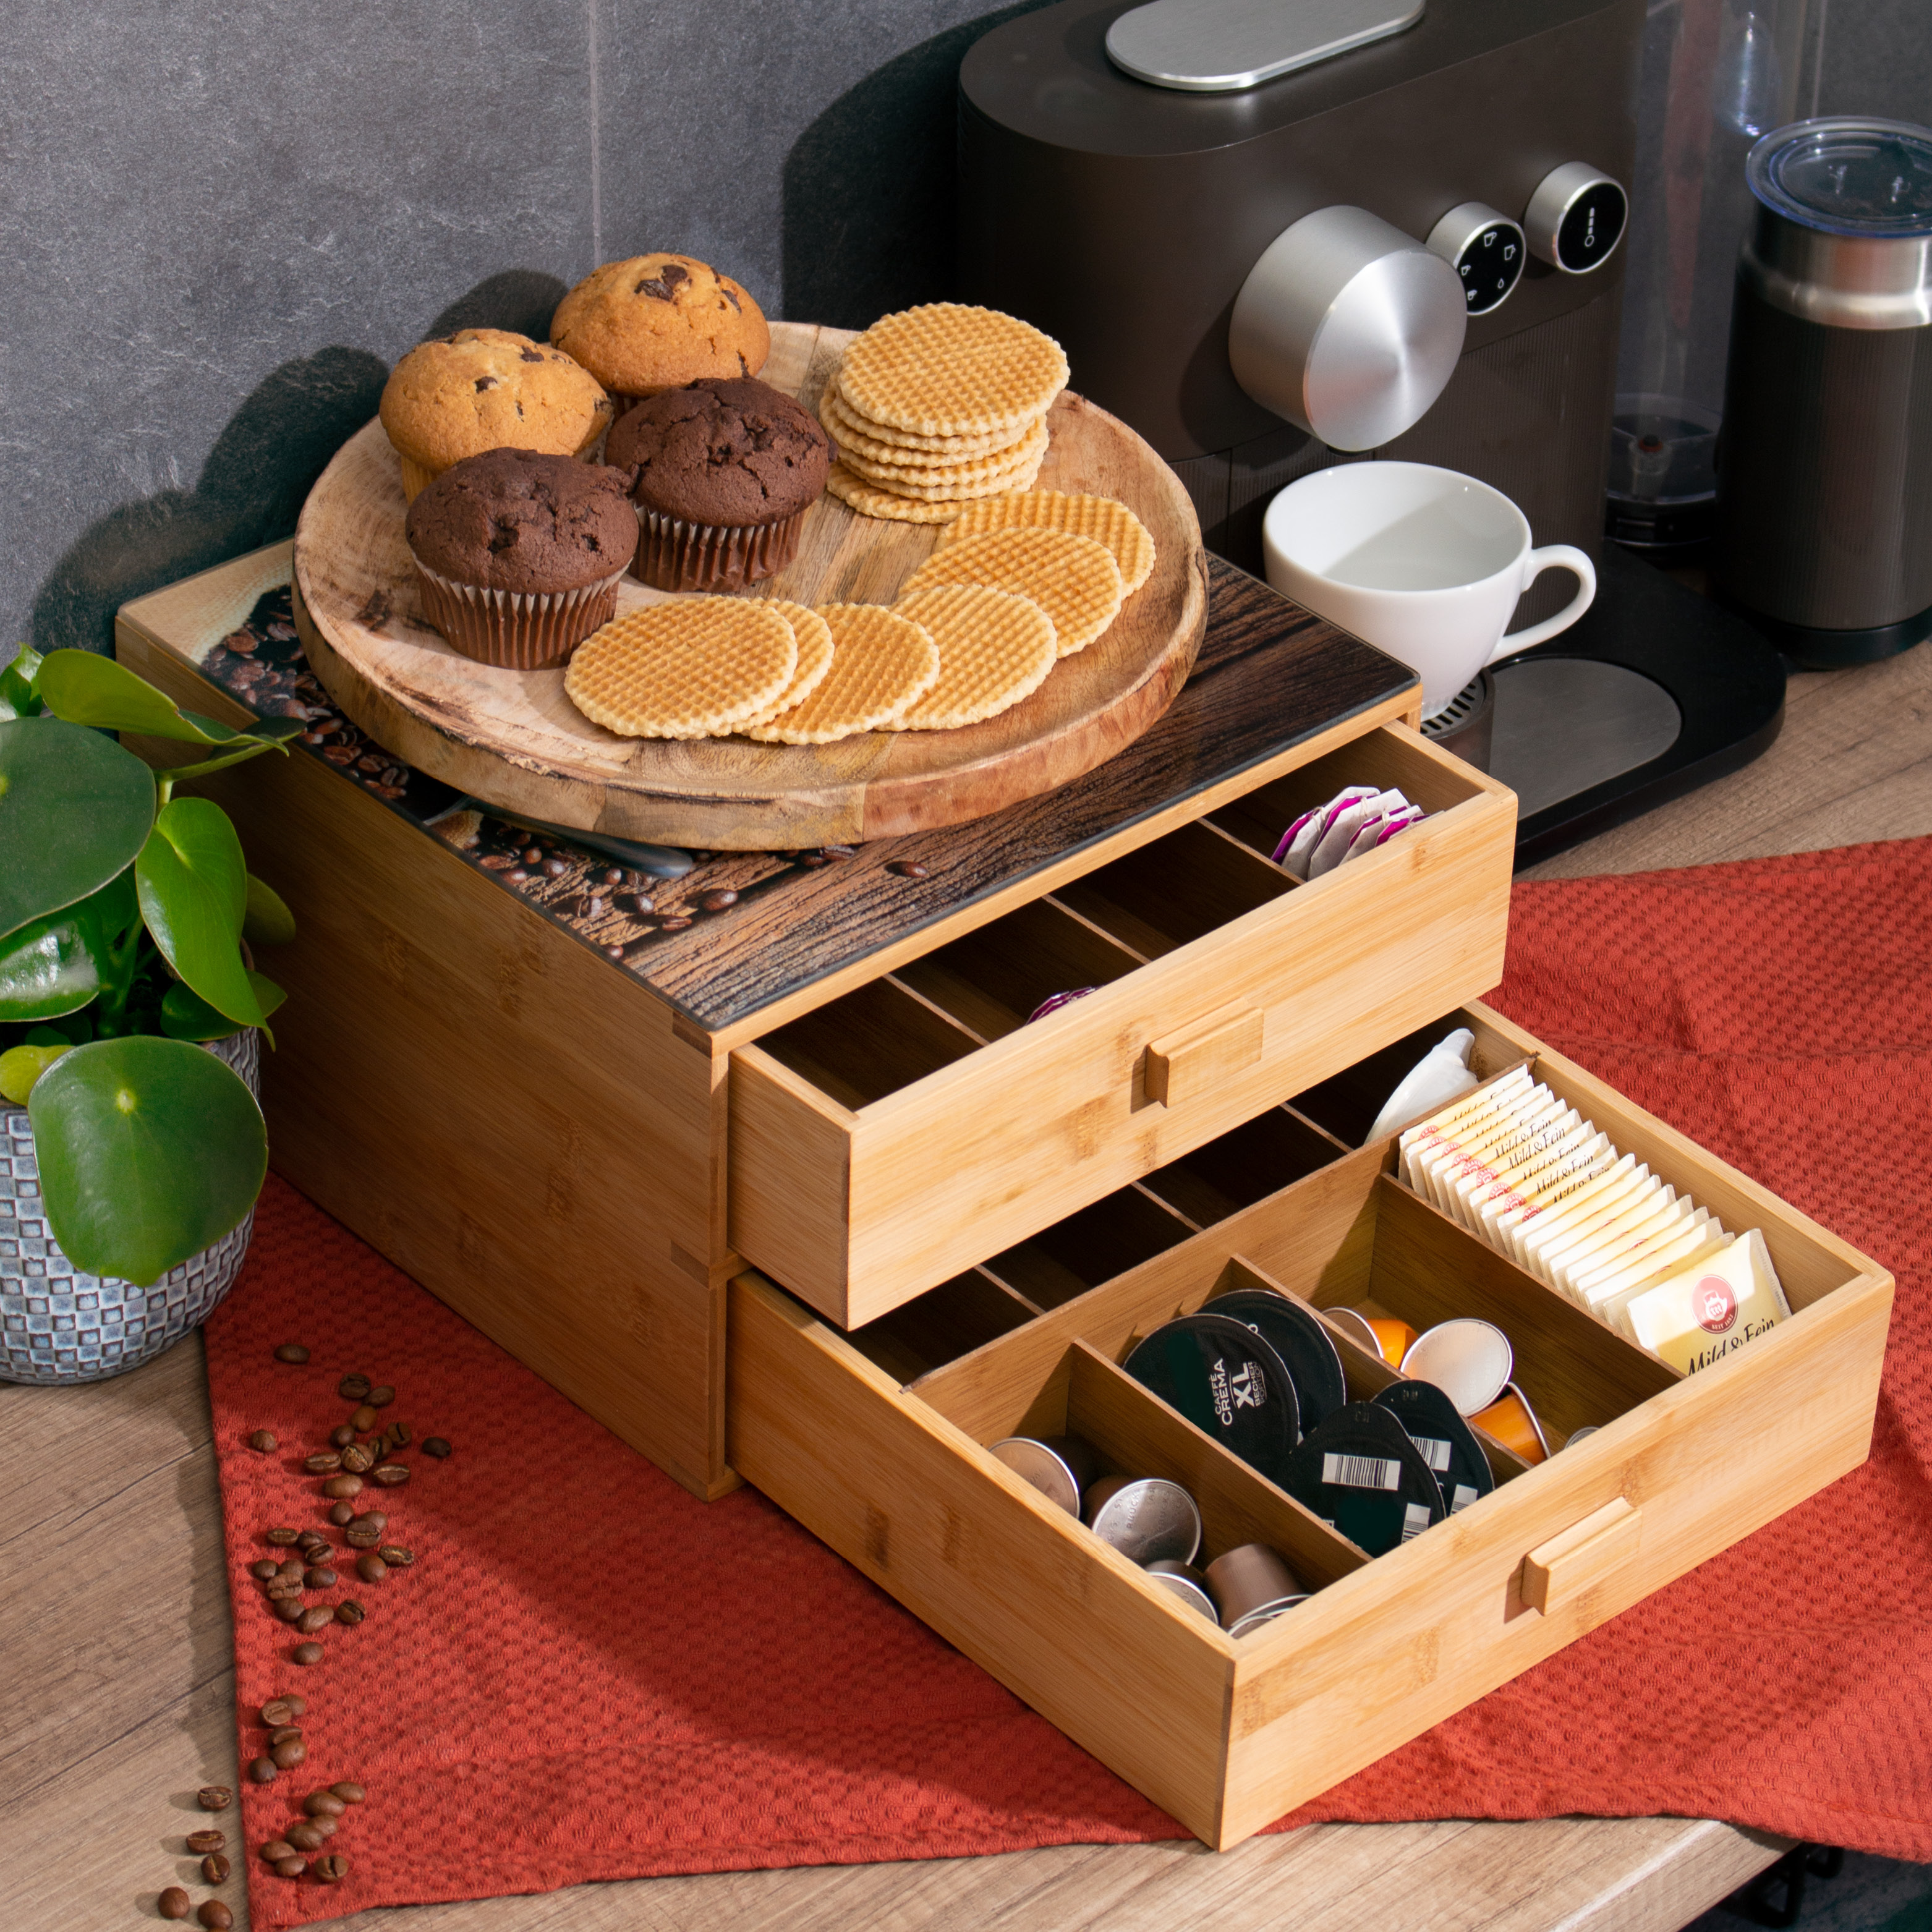 Kaffeekapsel-Box aus Bambus mit Dekor-Glasplatte - Teebeutel-Box